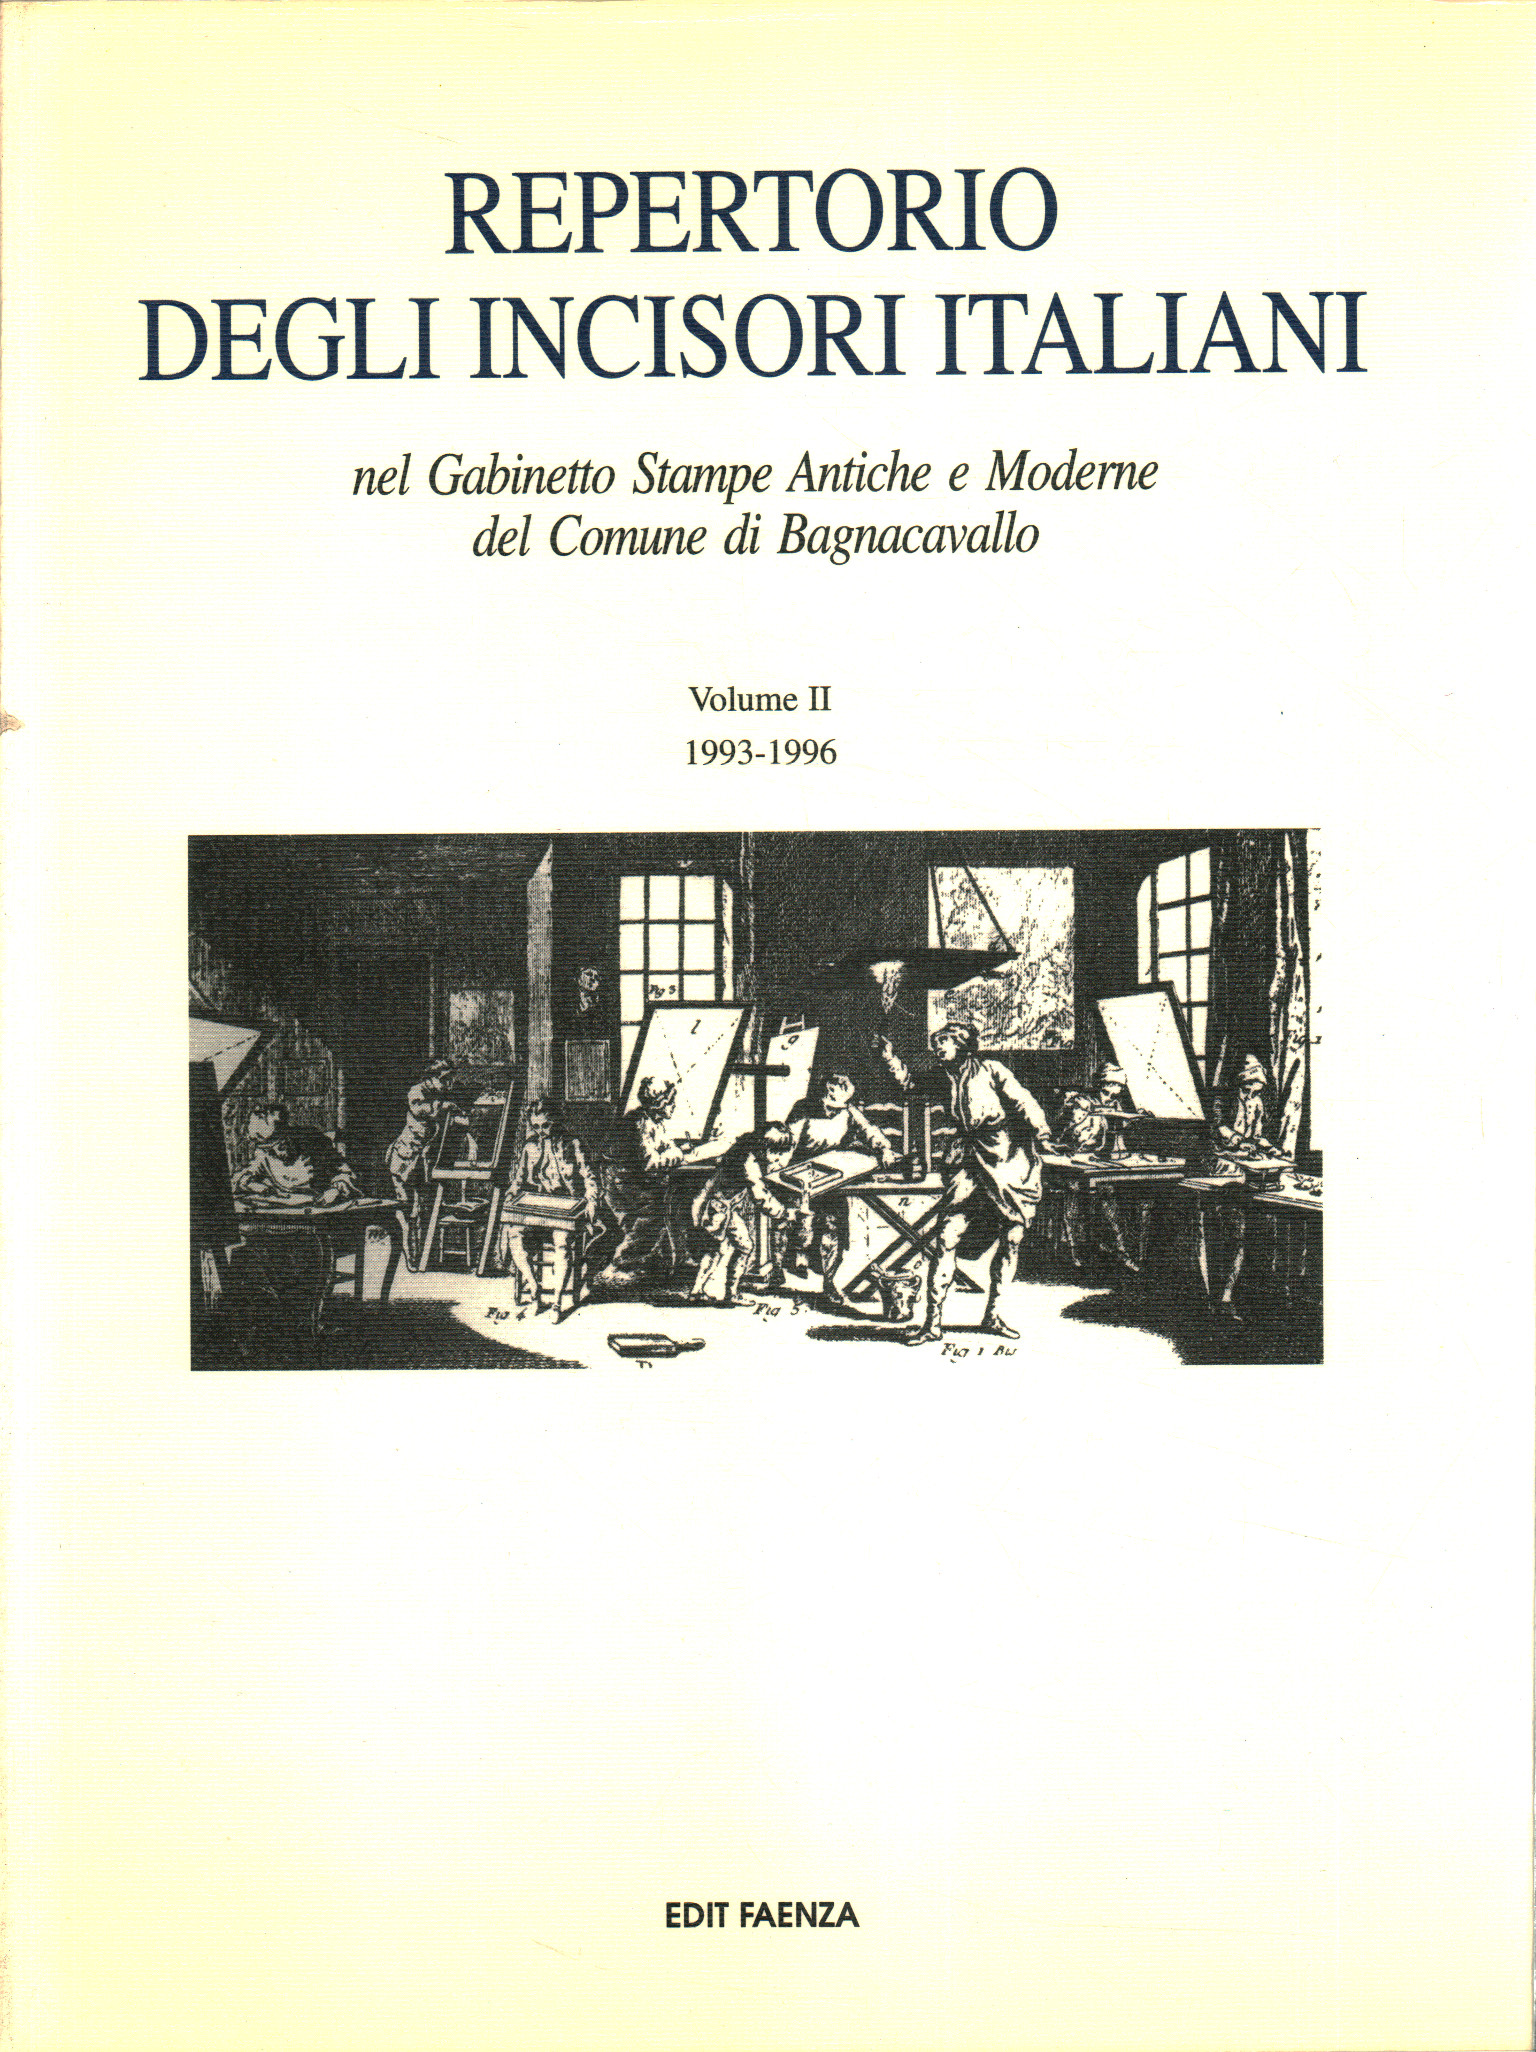 Repertory of Italian engravers in G